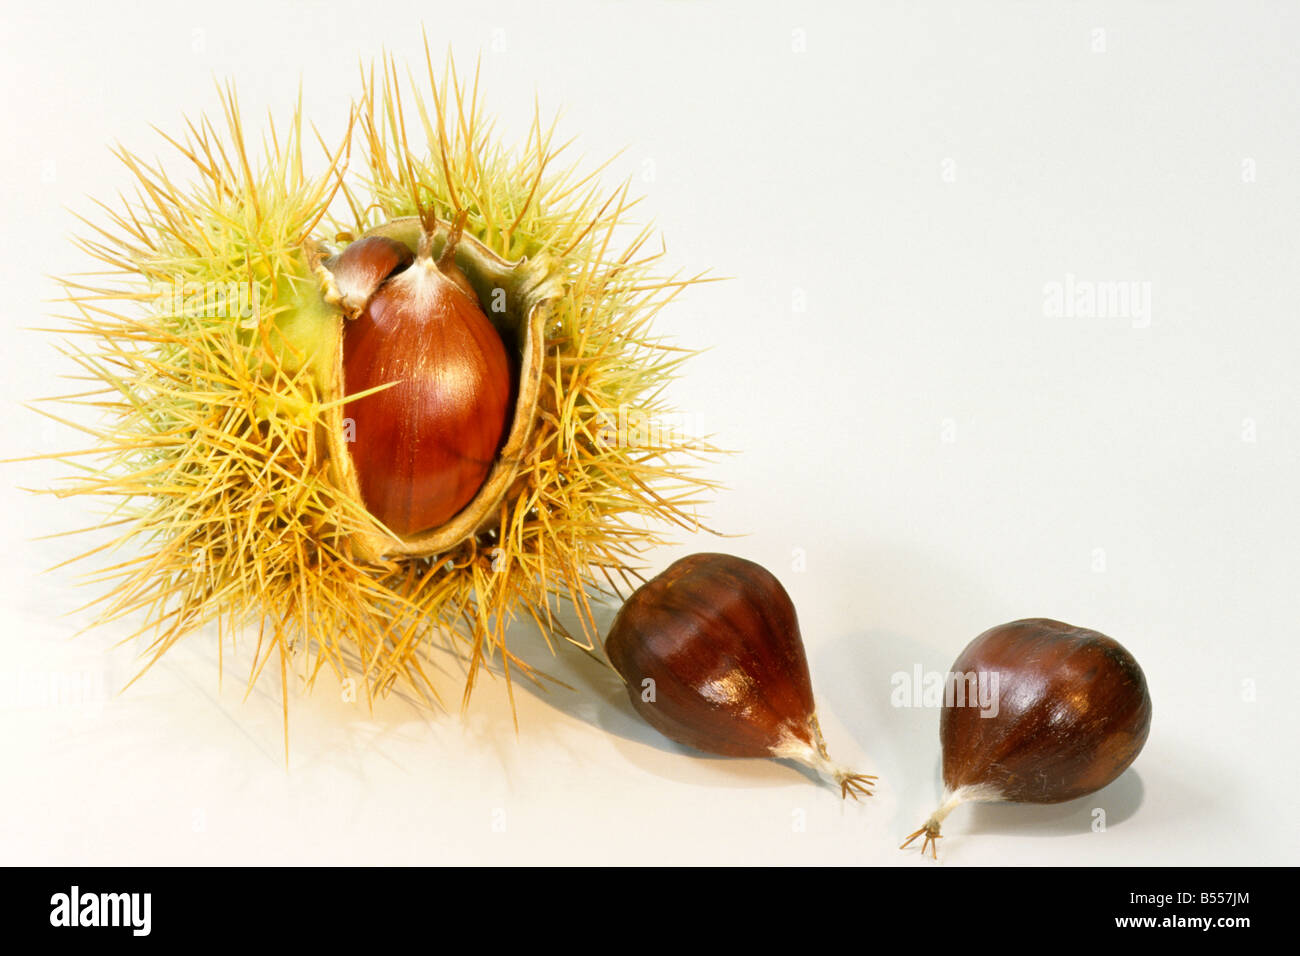 Spanish Chestnut, Sweet Chestnut (Castanea sativa), edible chestnuts, studio picture Stock Photo